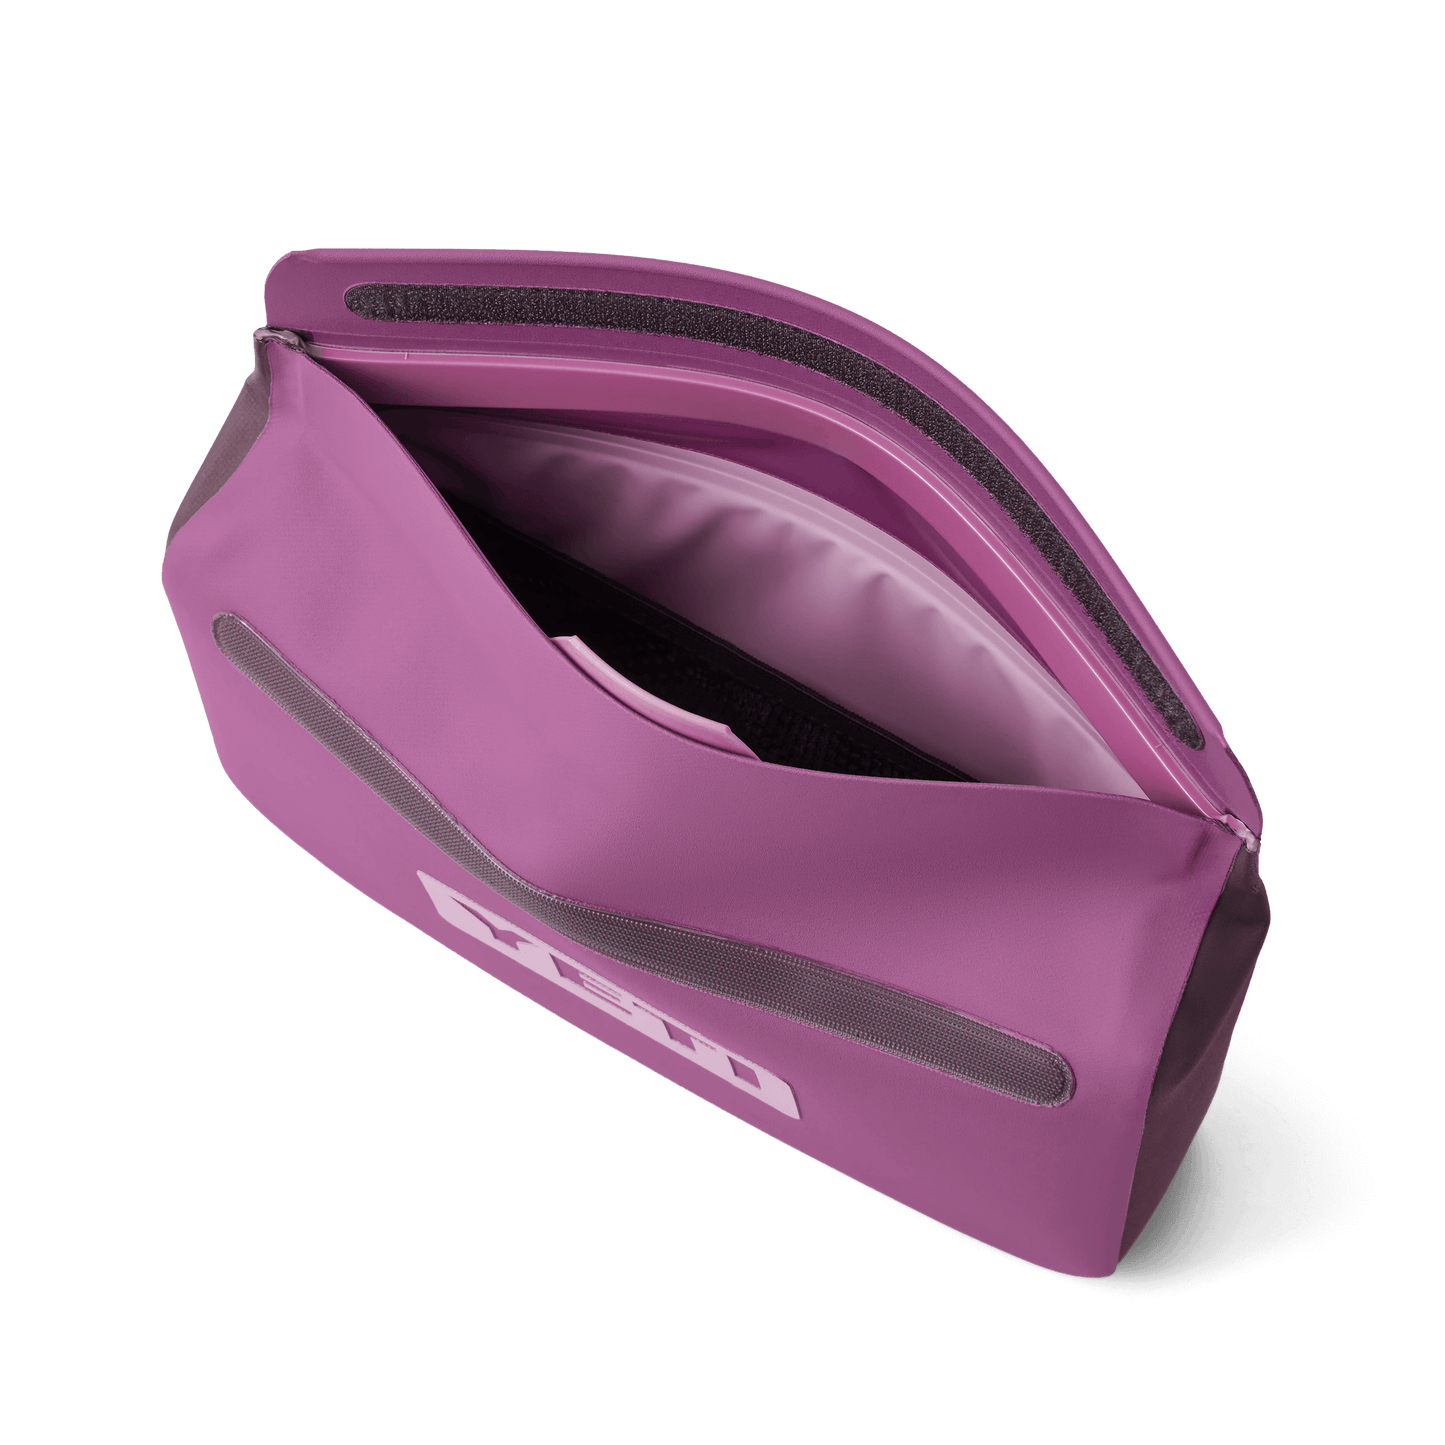 YETI Sidekick Dry® Zubehörtasche 3L Nordic Purple